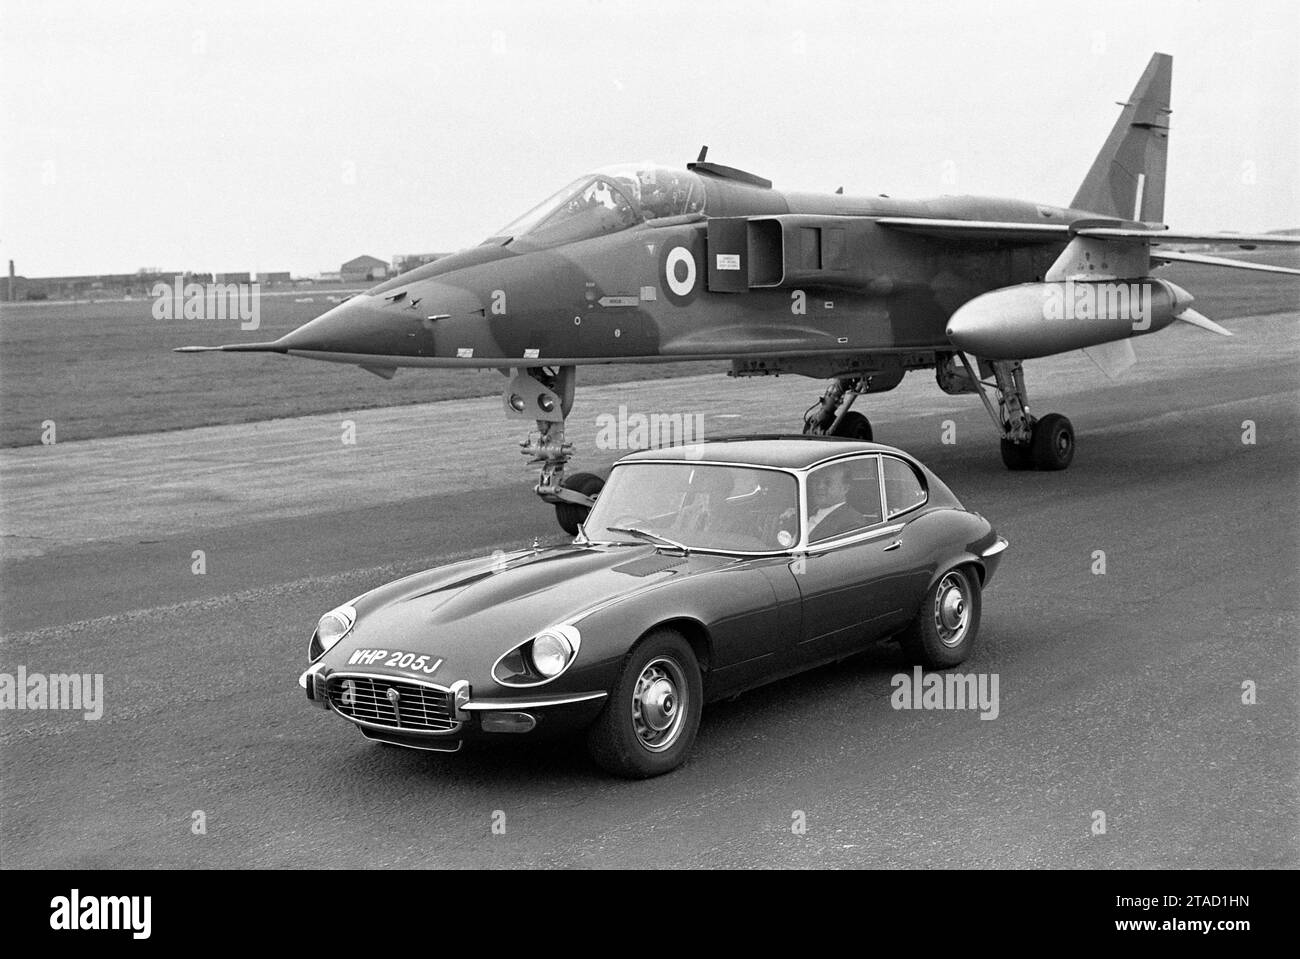 1971 Jaguar E-type Series 3, V12 engine, WHP 205J, parked beside RAF Sepecat prototype Jaguar fighter aircraft on runway Stock Photo